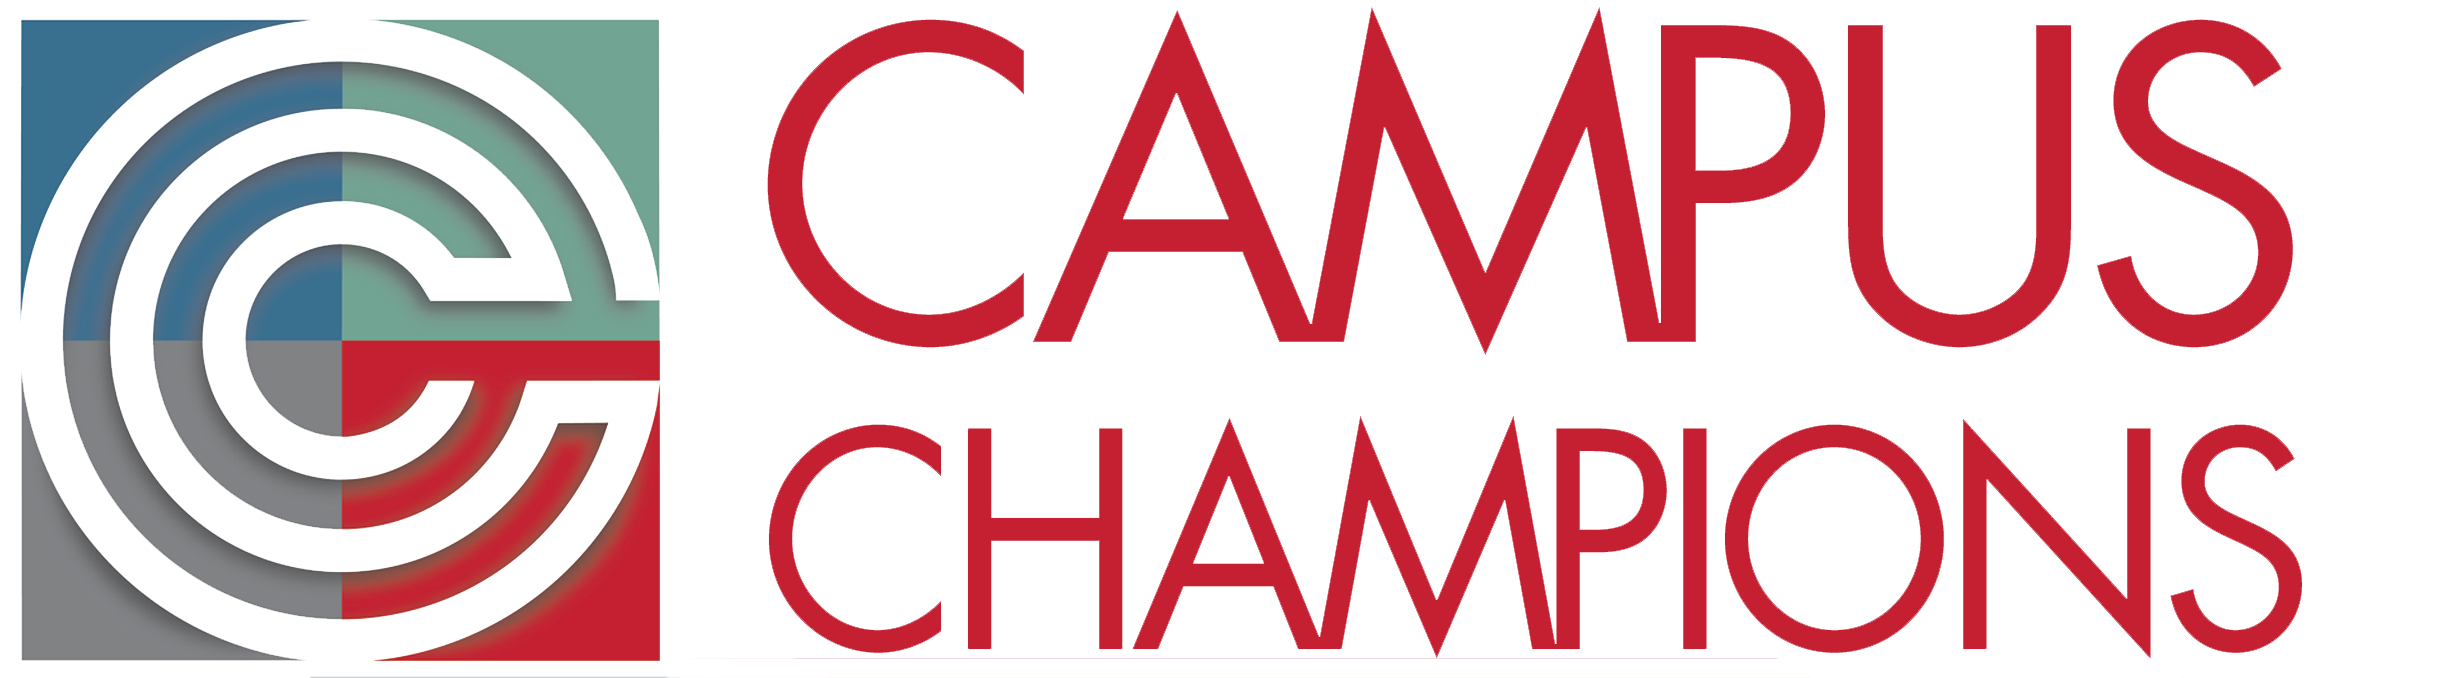 campuschampions logo